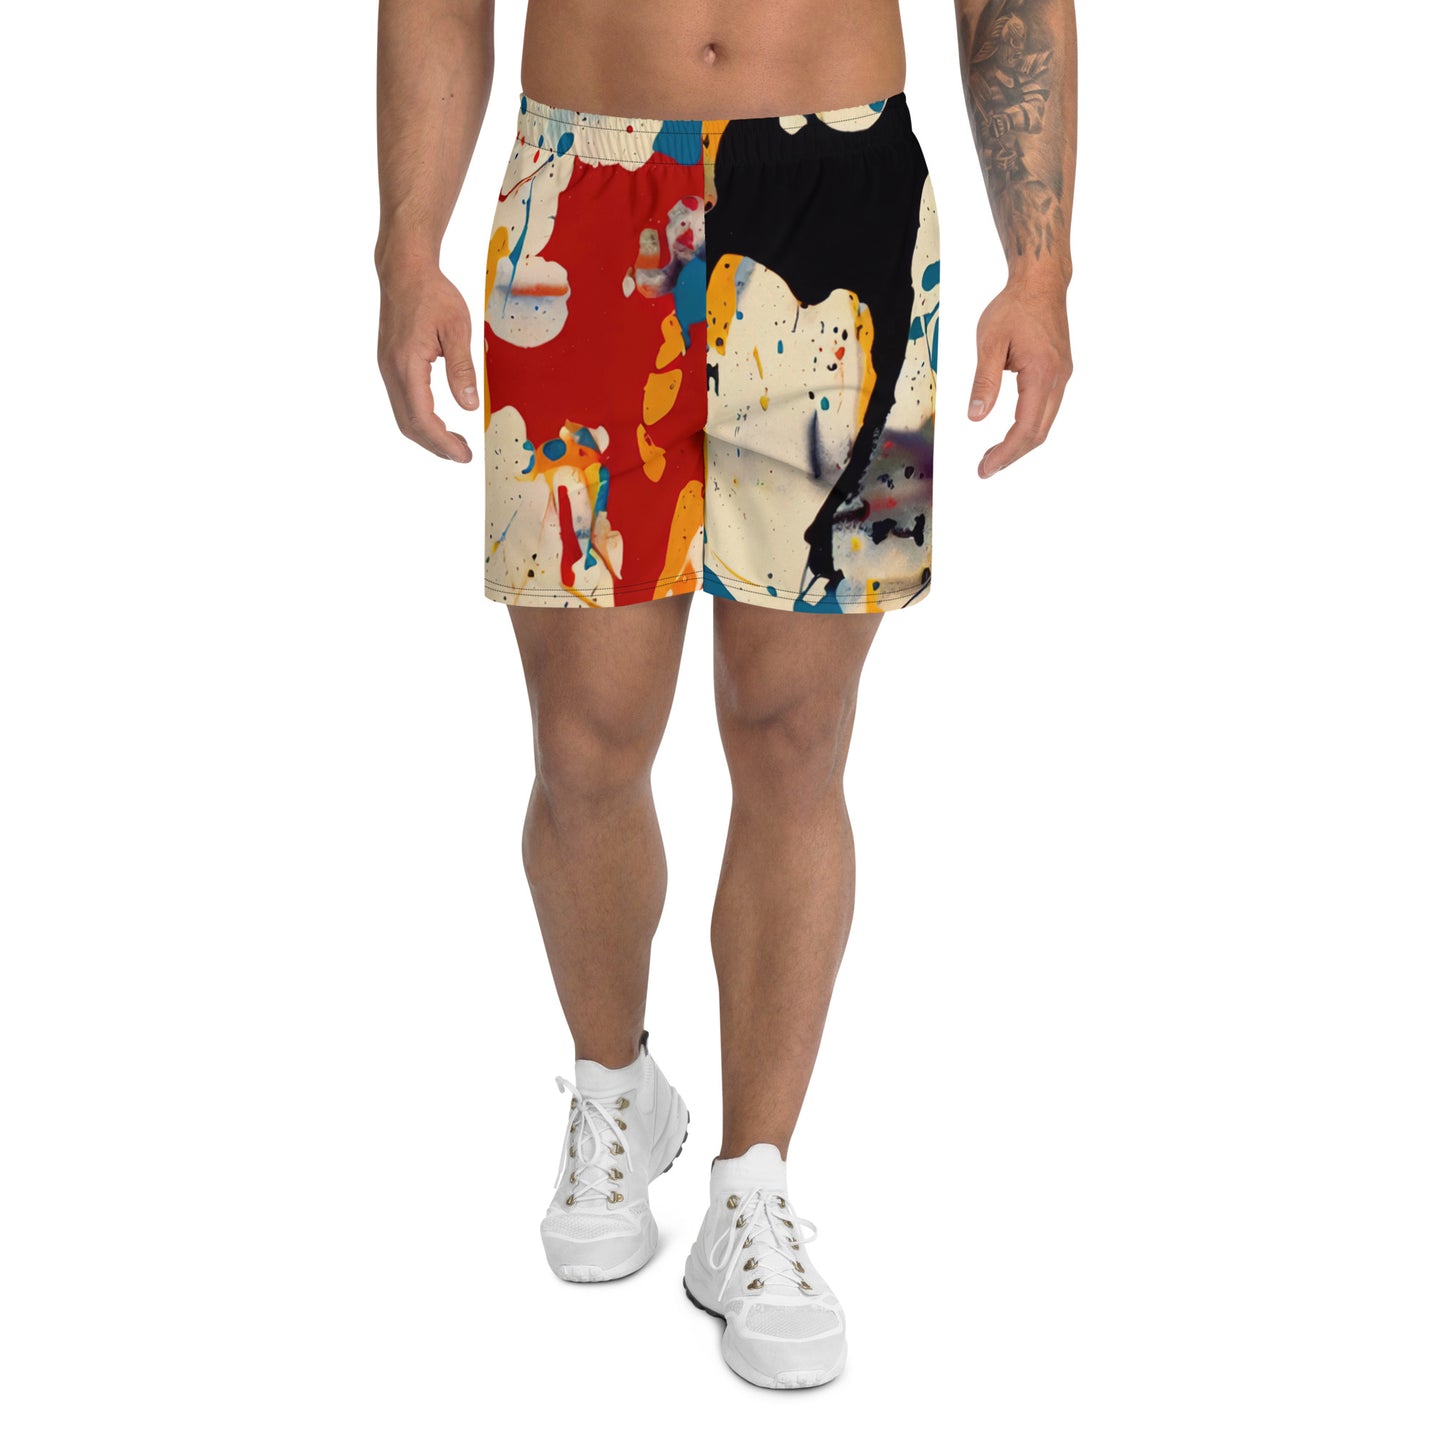 DMV 0085 Avant Garde Men's Recycled Athletic Shorts